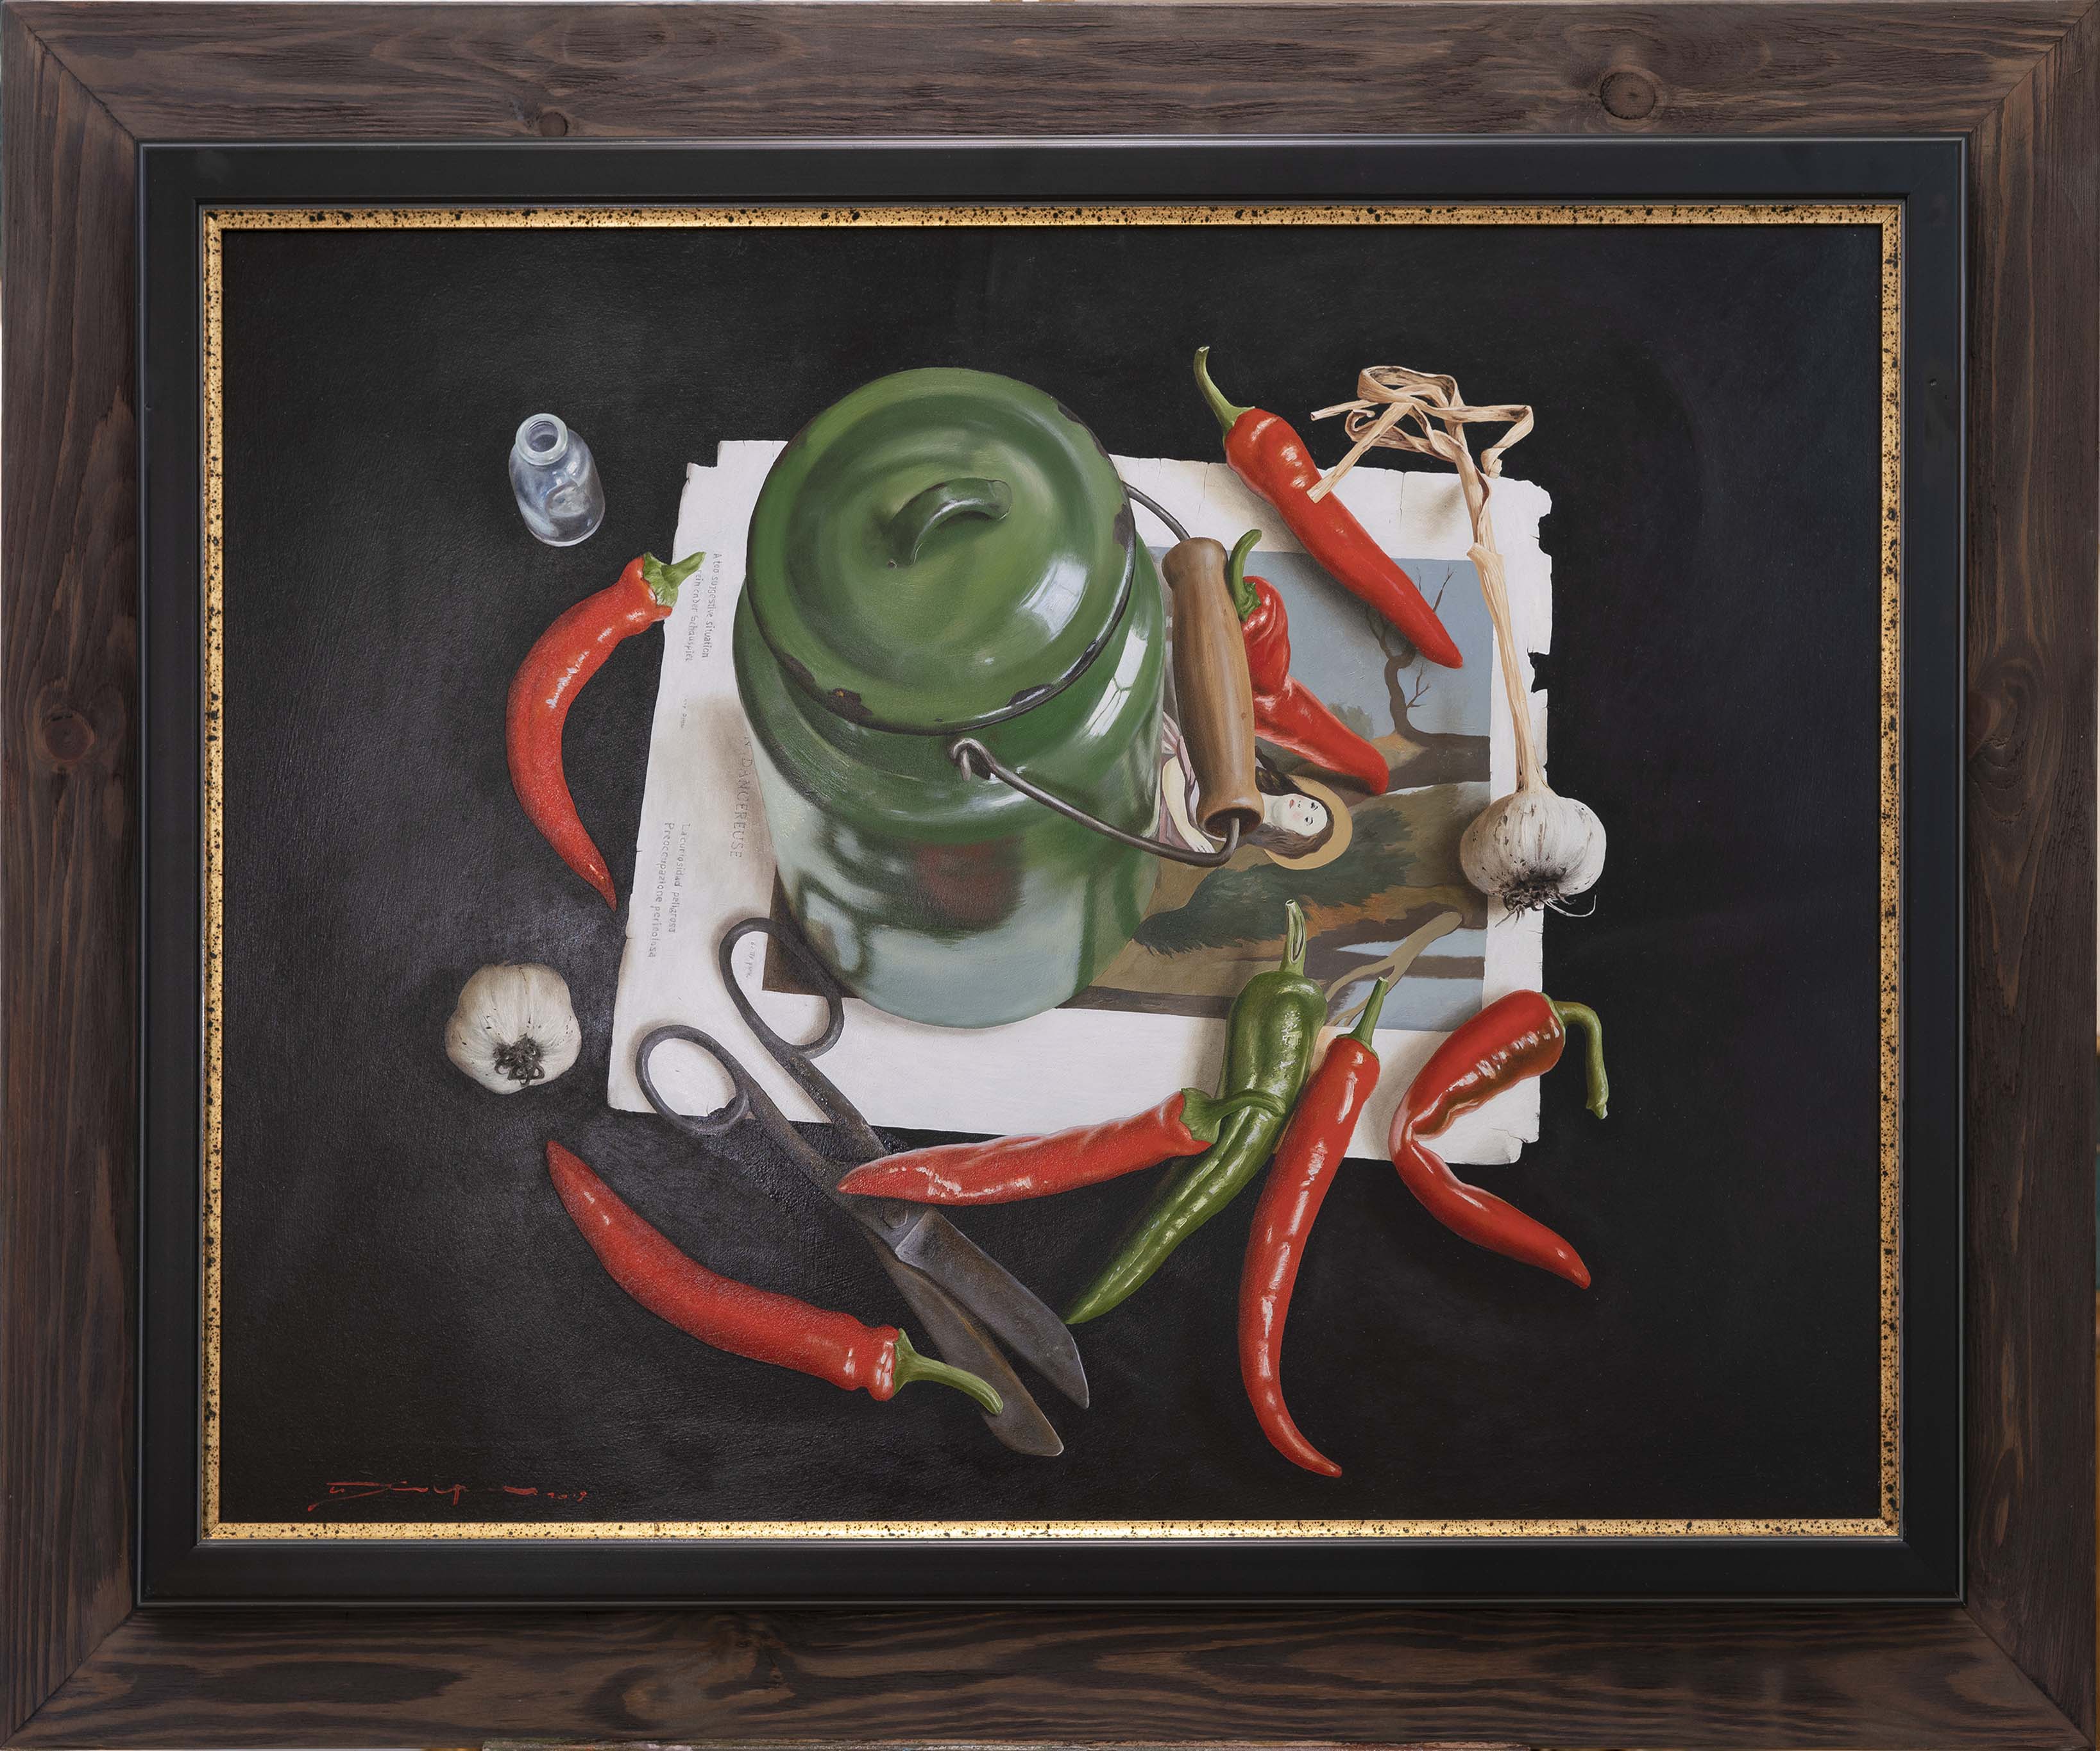 Balashovsky Peppers - 1, Ilya Khokhrin, Buy the painting Oil